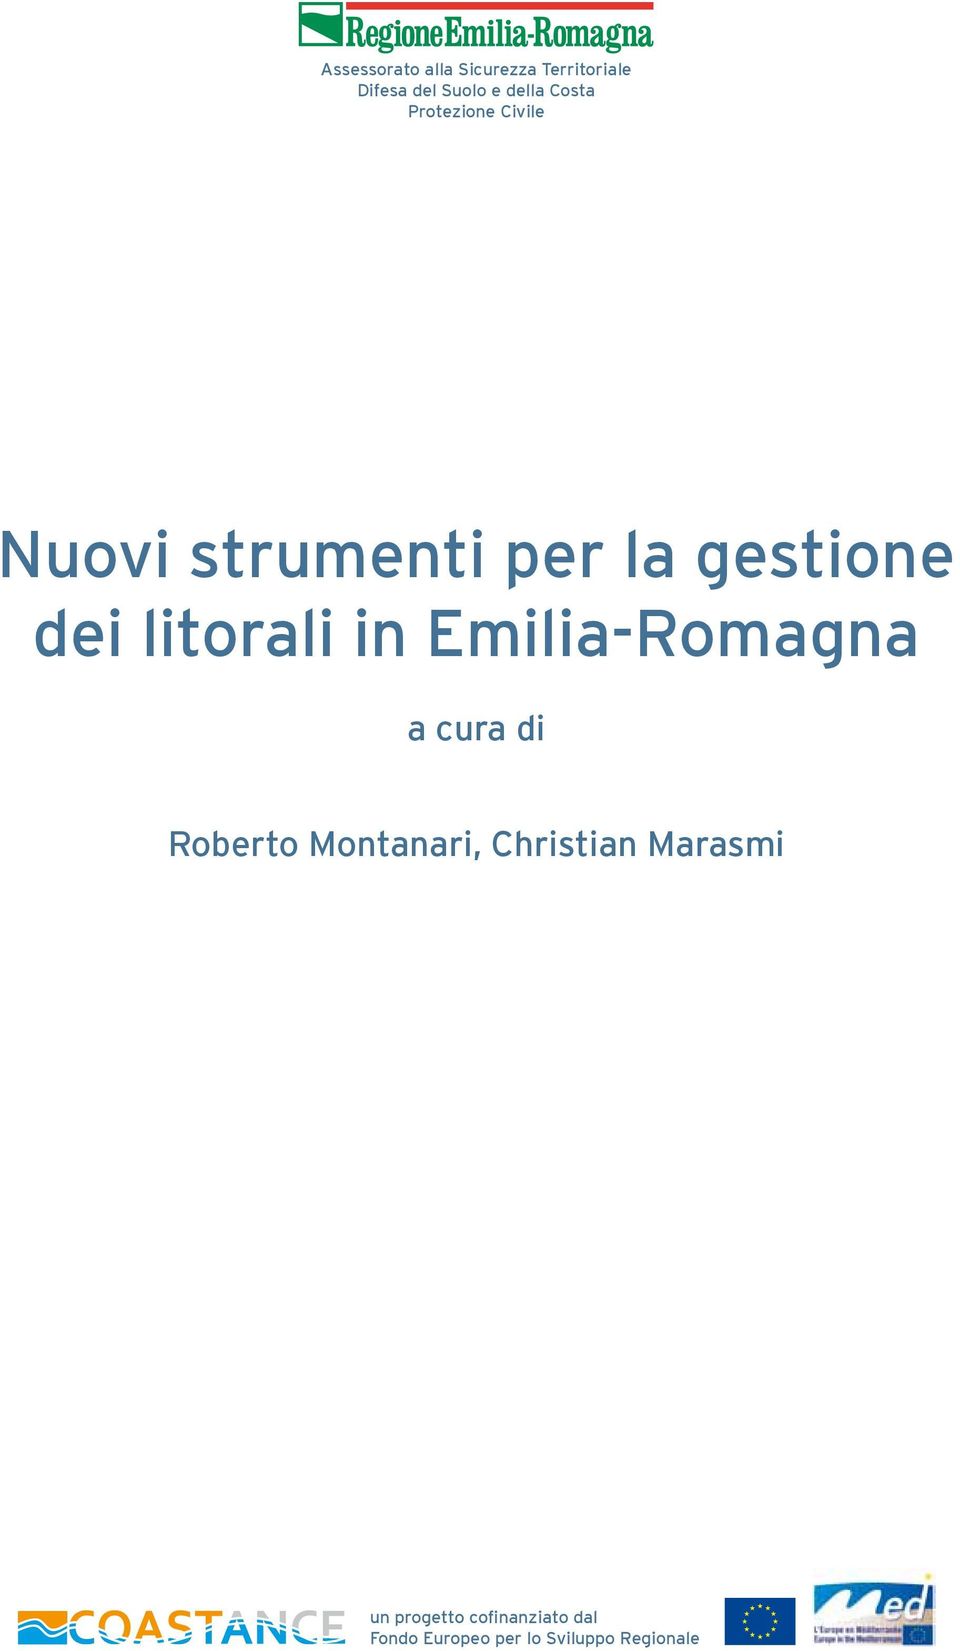 litorali in Emilia-Romagna a cura di Roberto Montanari, Christian